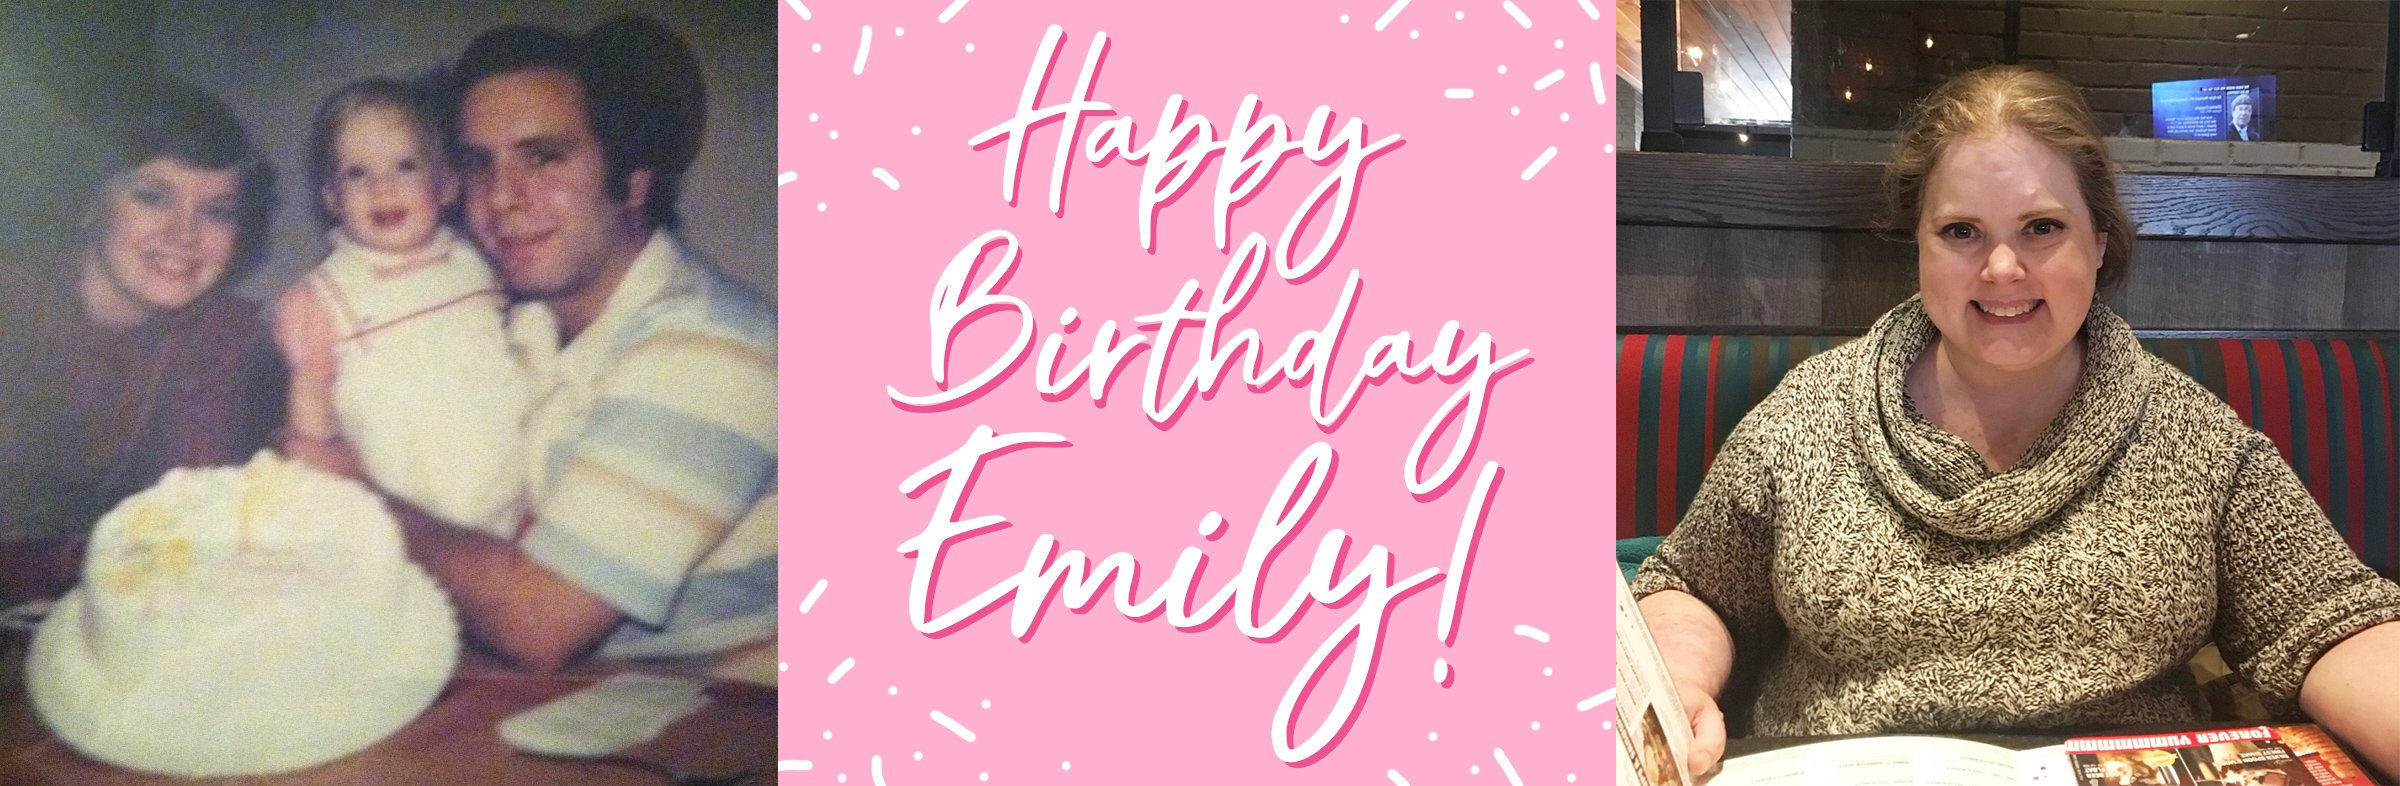 Happy Birthday Emily! 🎉 — Emily M. DeArdo